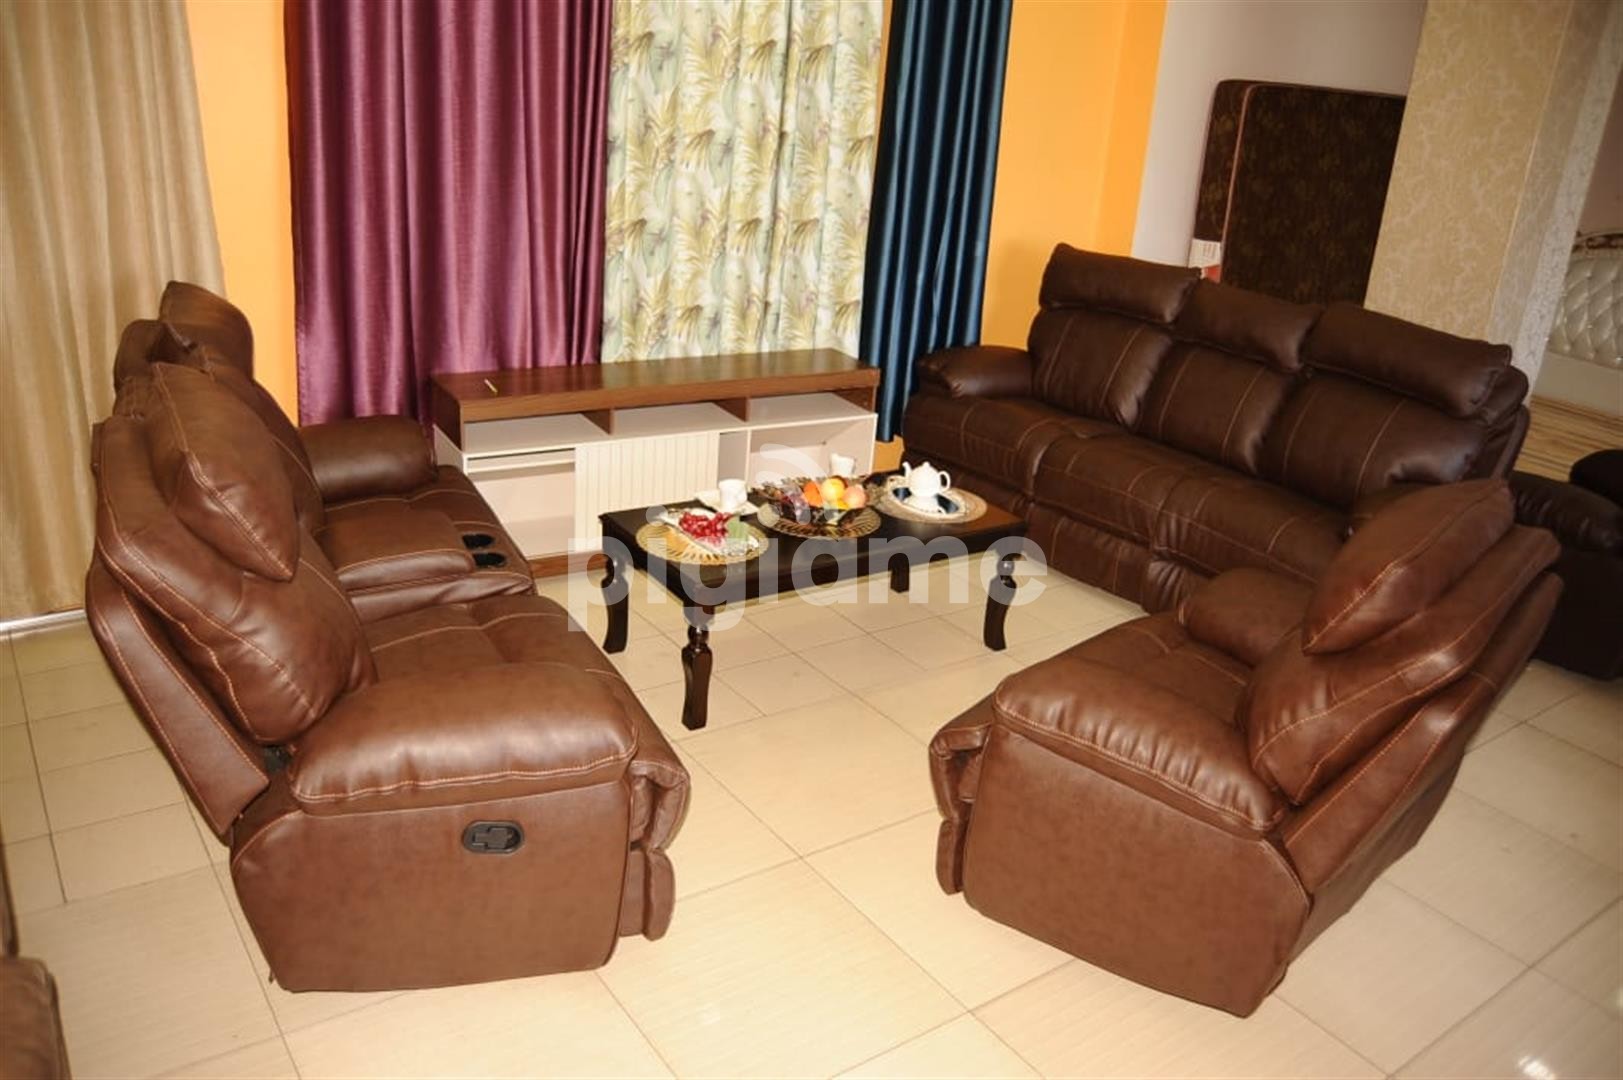 leather sofa seats kenya